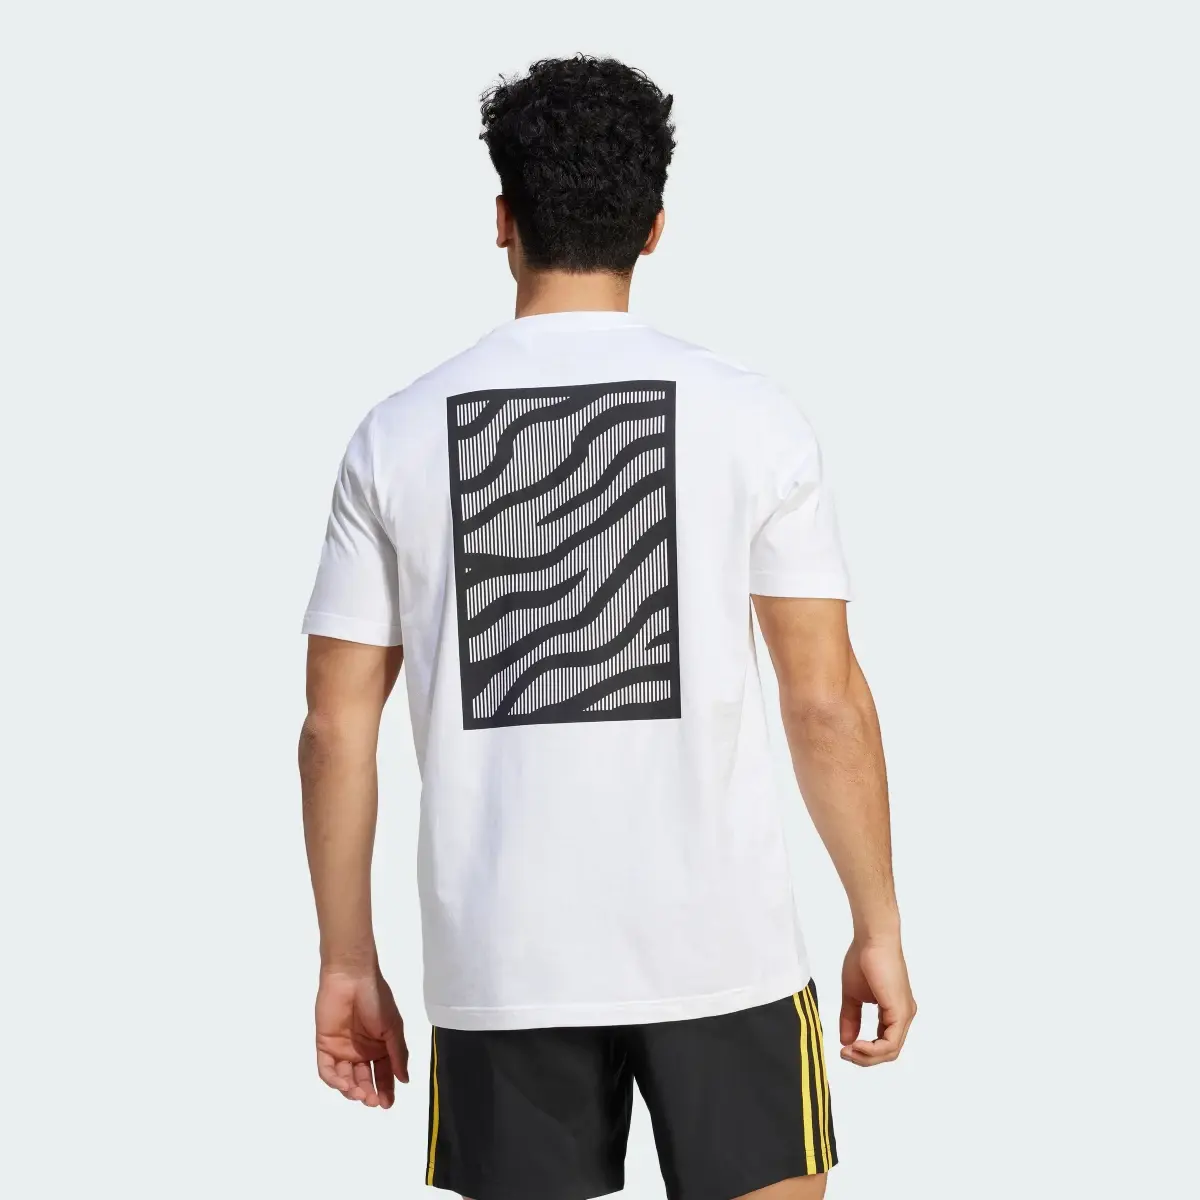 Adidas T-shirt Juventus DNA. 3